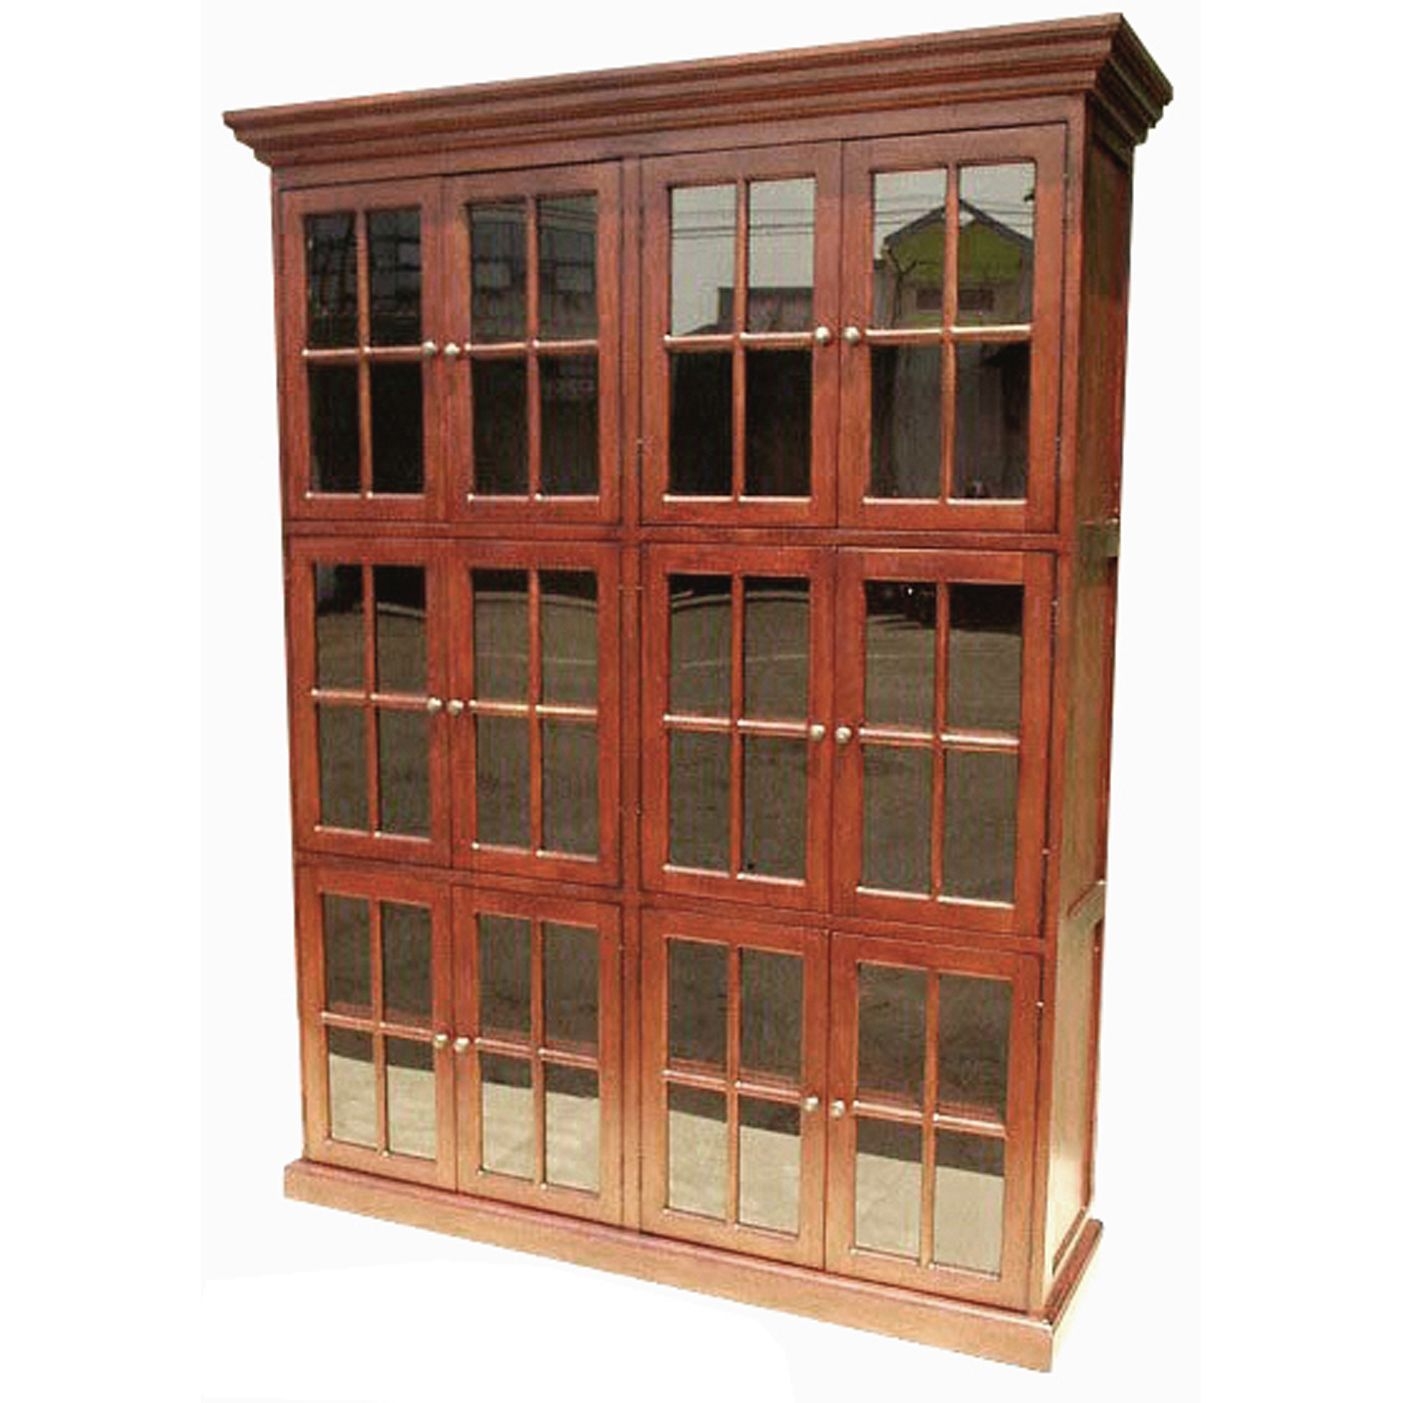 D-ART 12 Door Curio Bookcase Cabinet - in Mahogany Wood